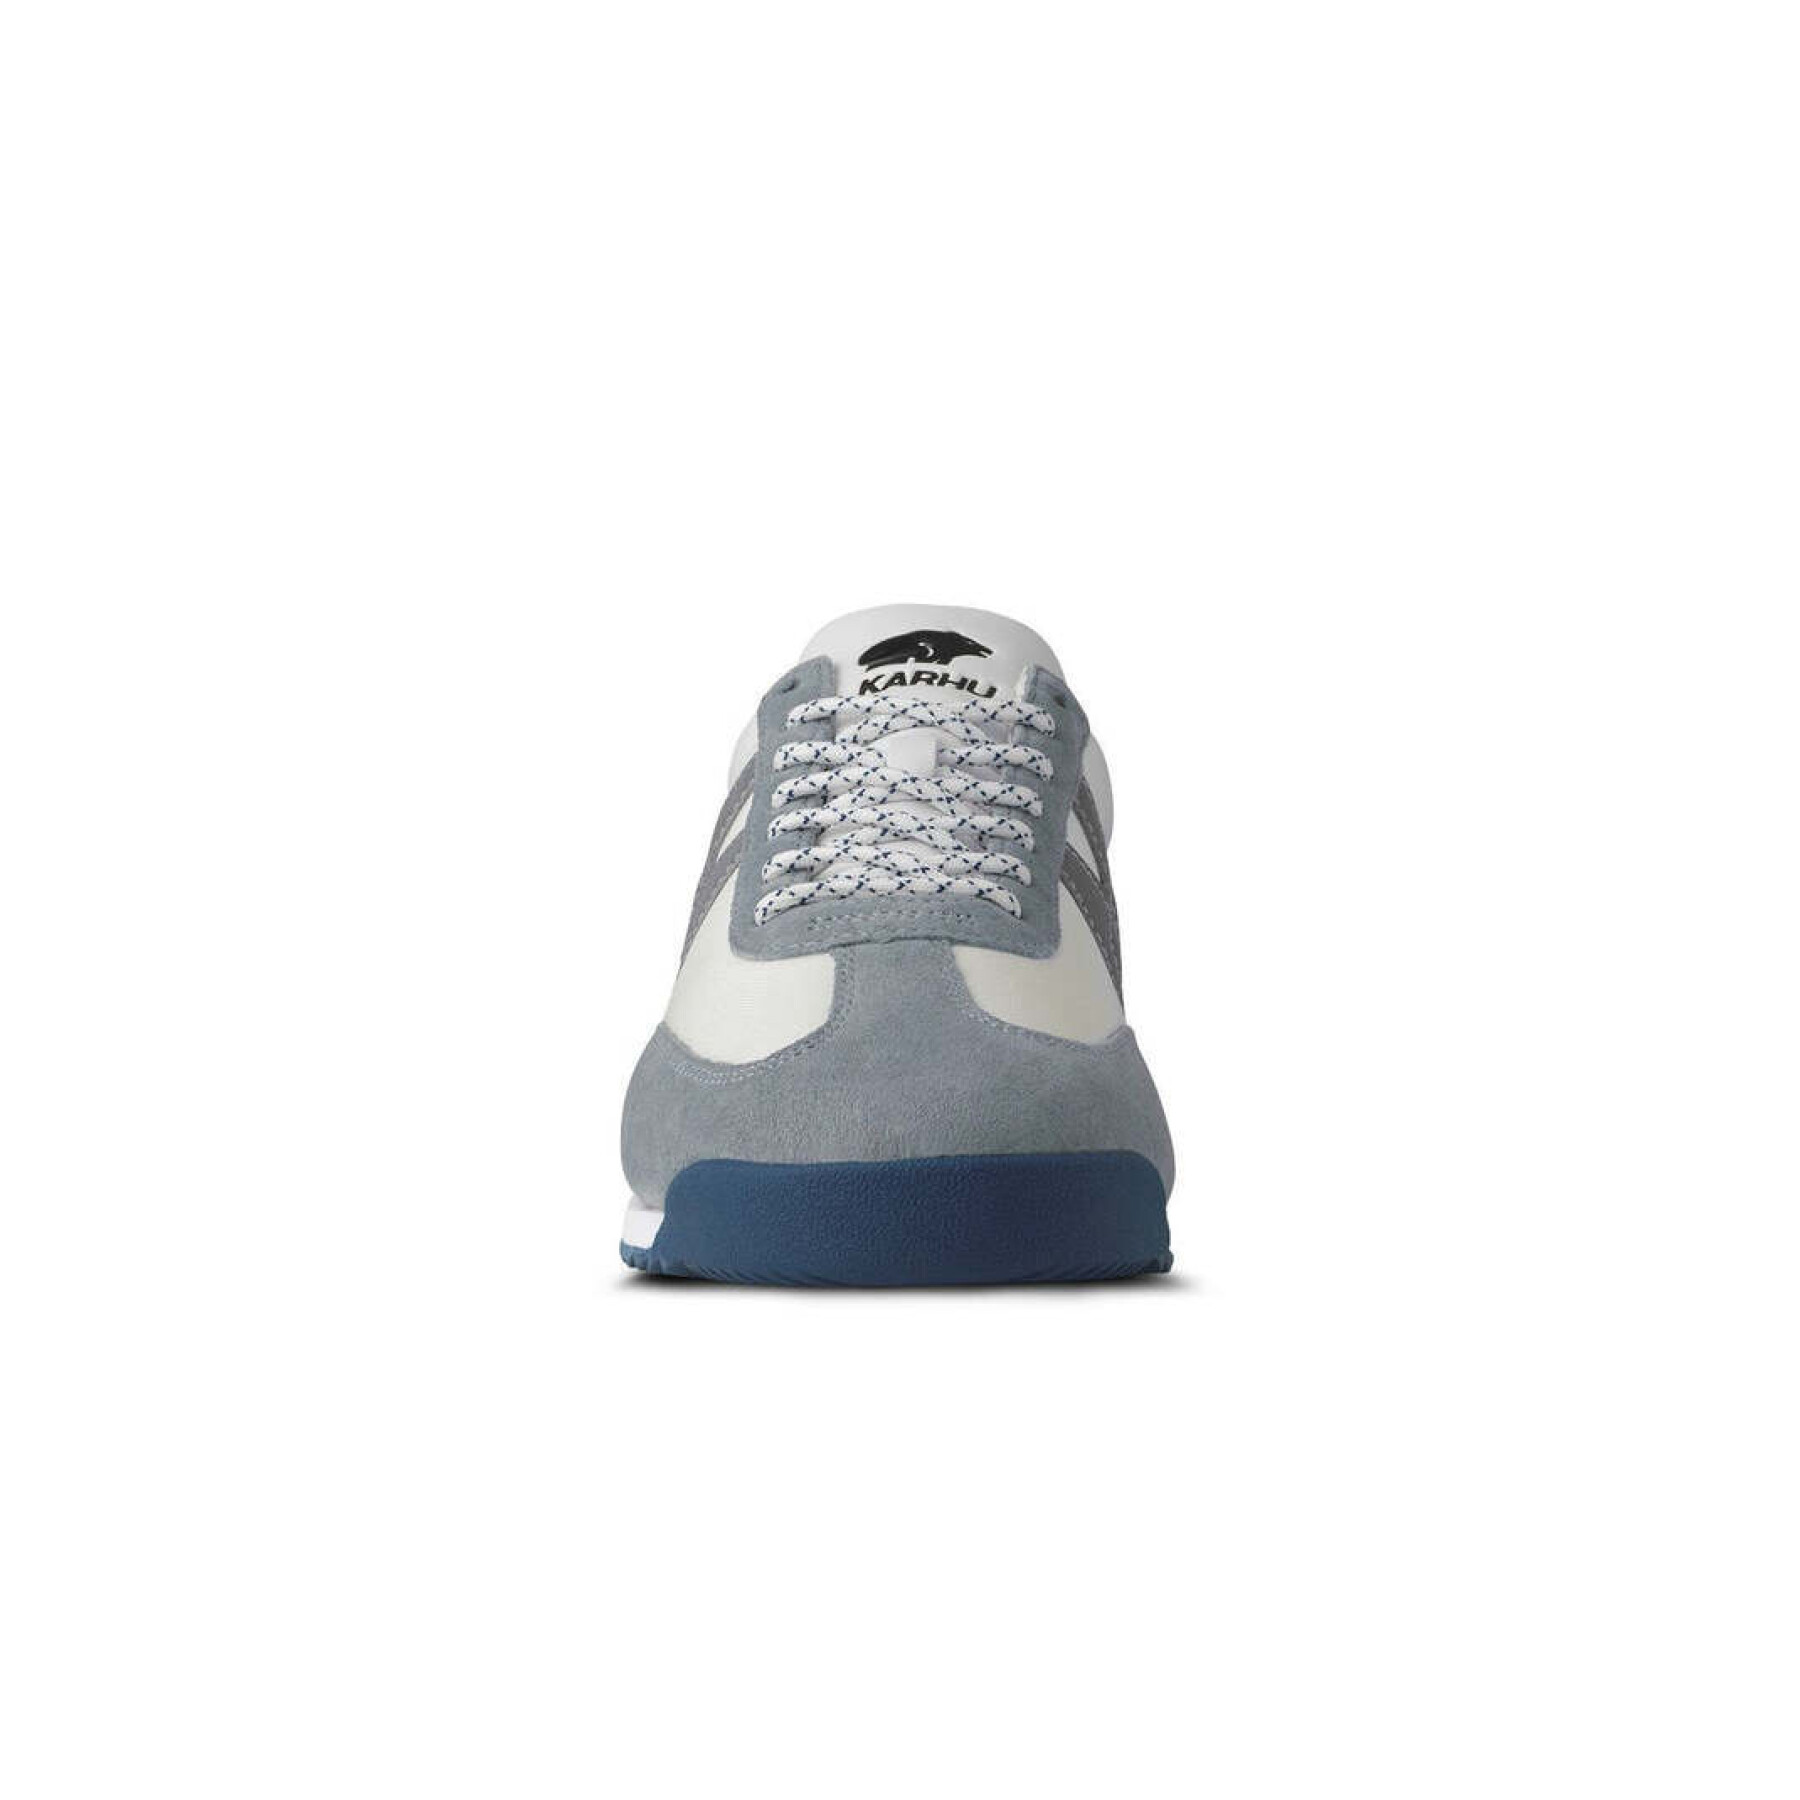 Sneakers Karhu Mestari - F805064 true navy/ silver